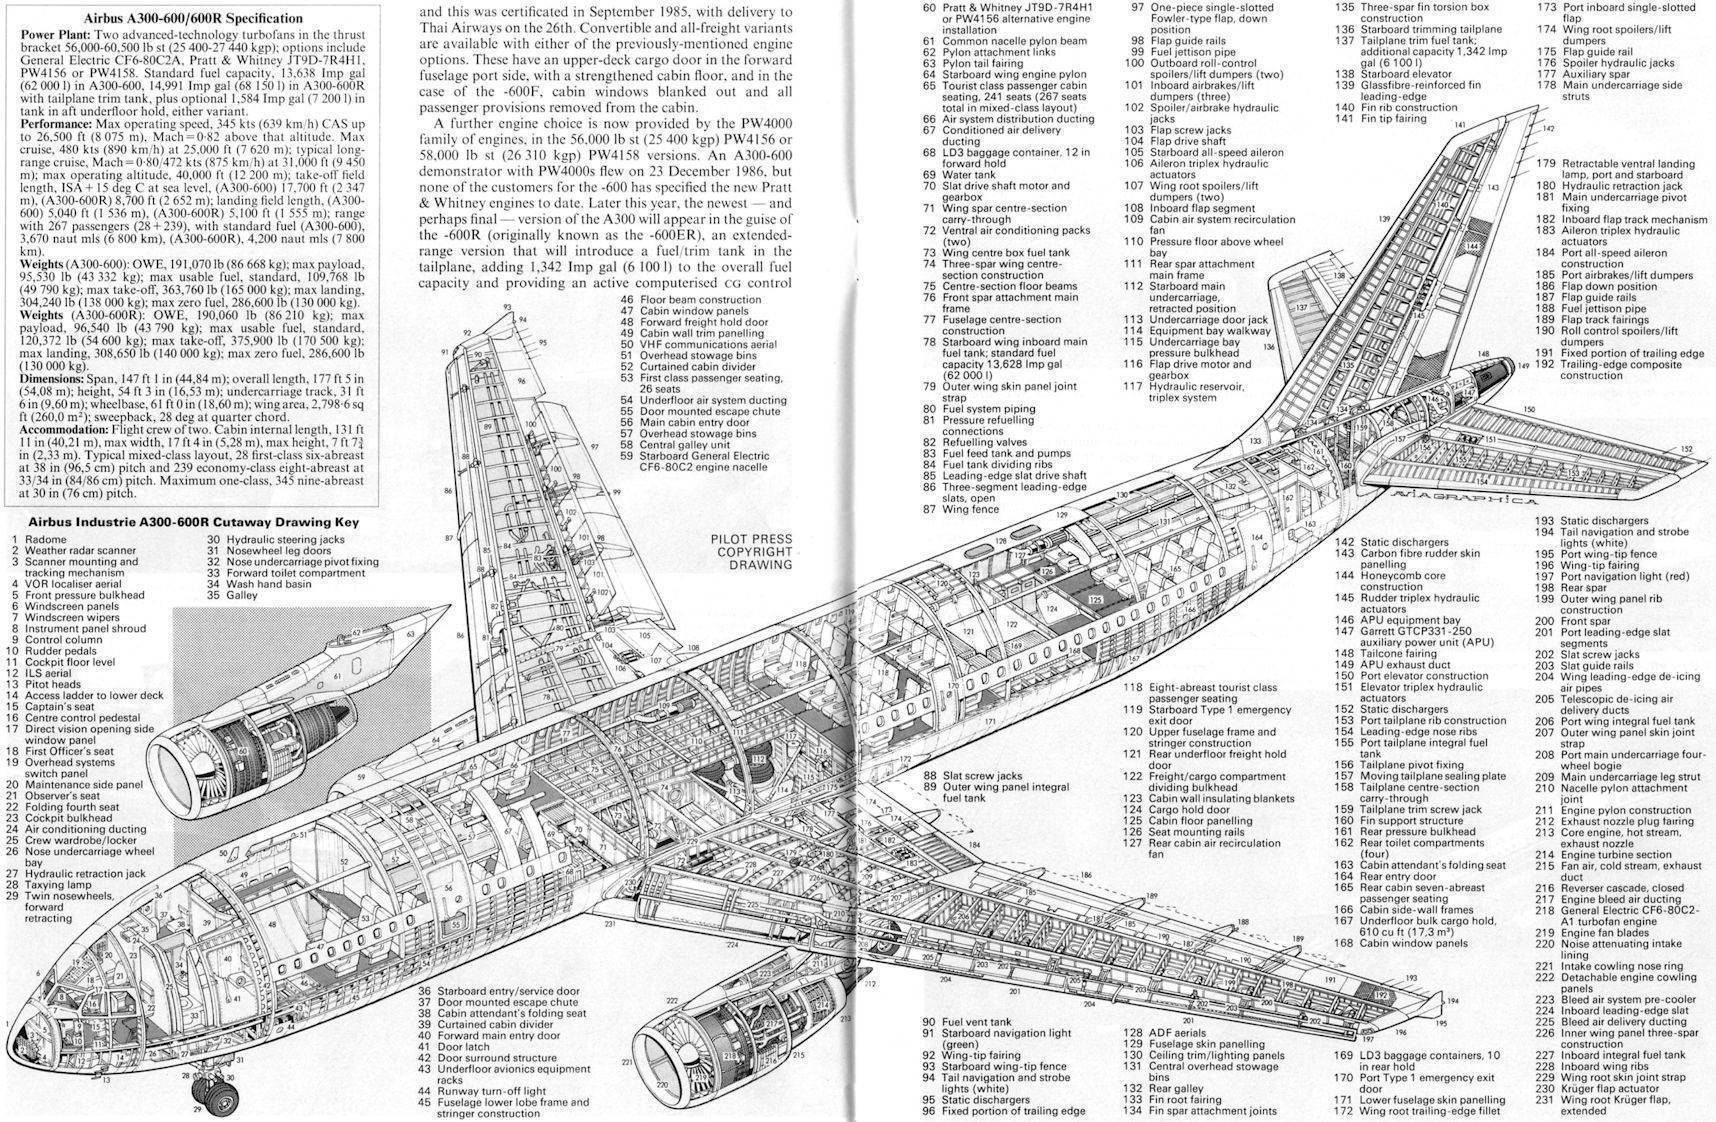 А320 - обзор самолета, технические характеристики, выбор мест
а320 - обзор самолета, технические характеристики, выбор мест